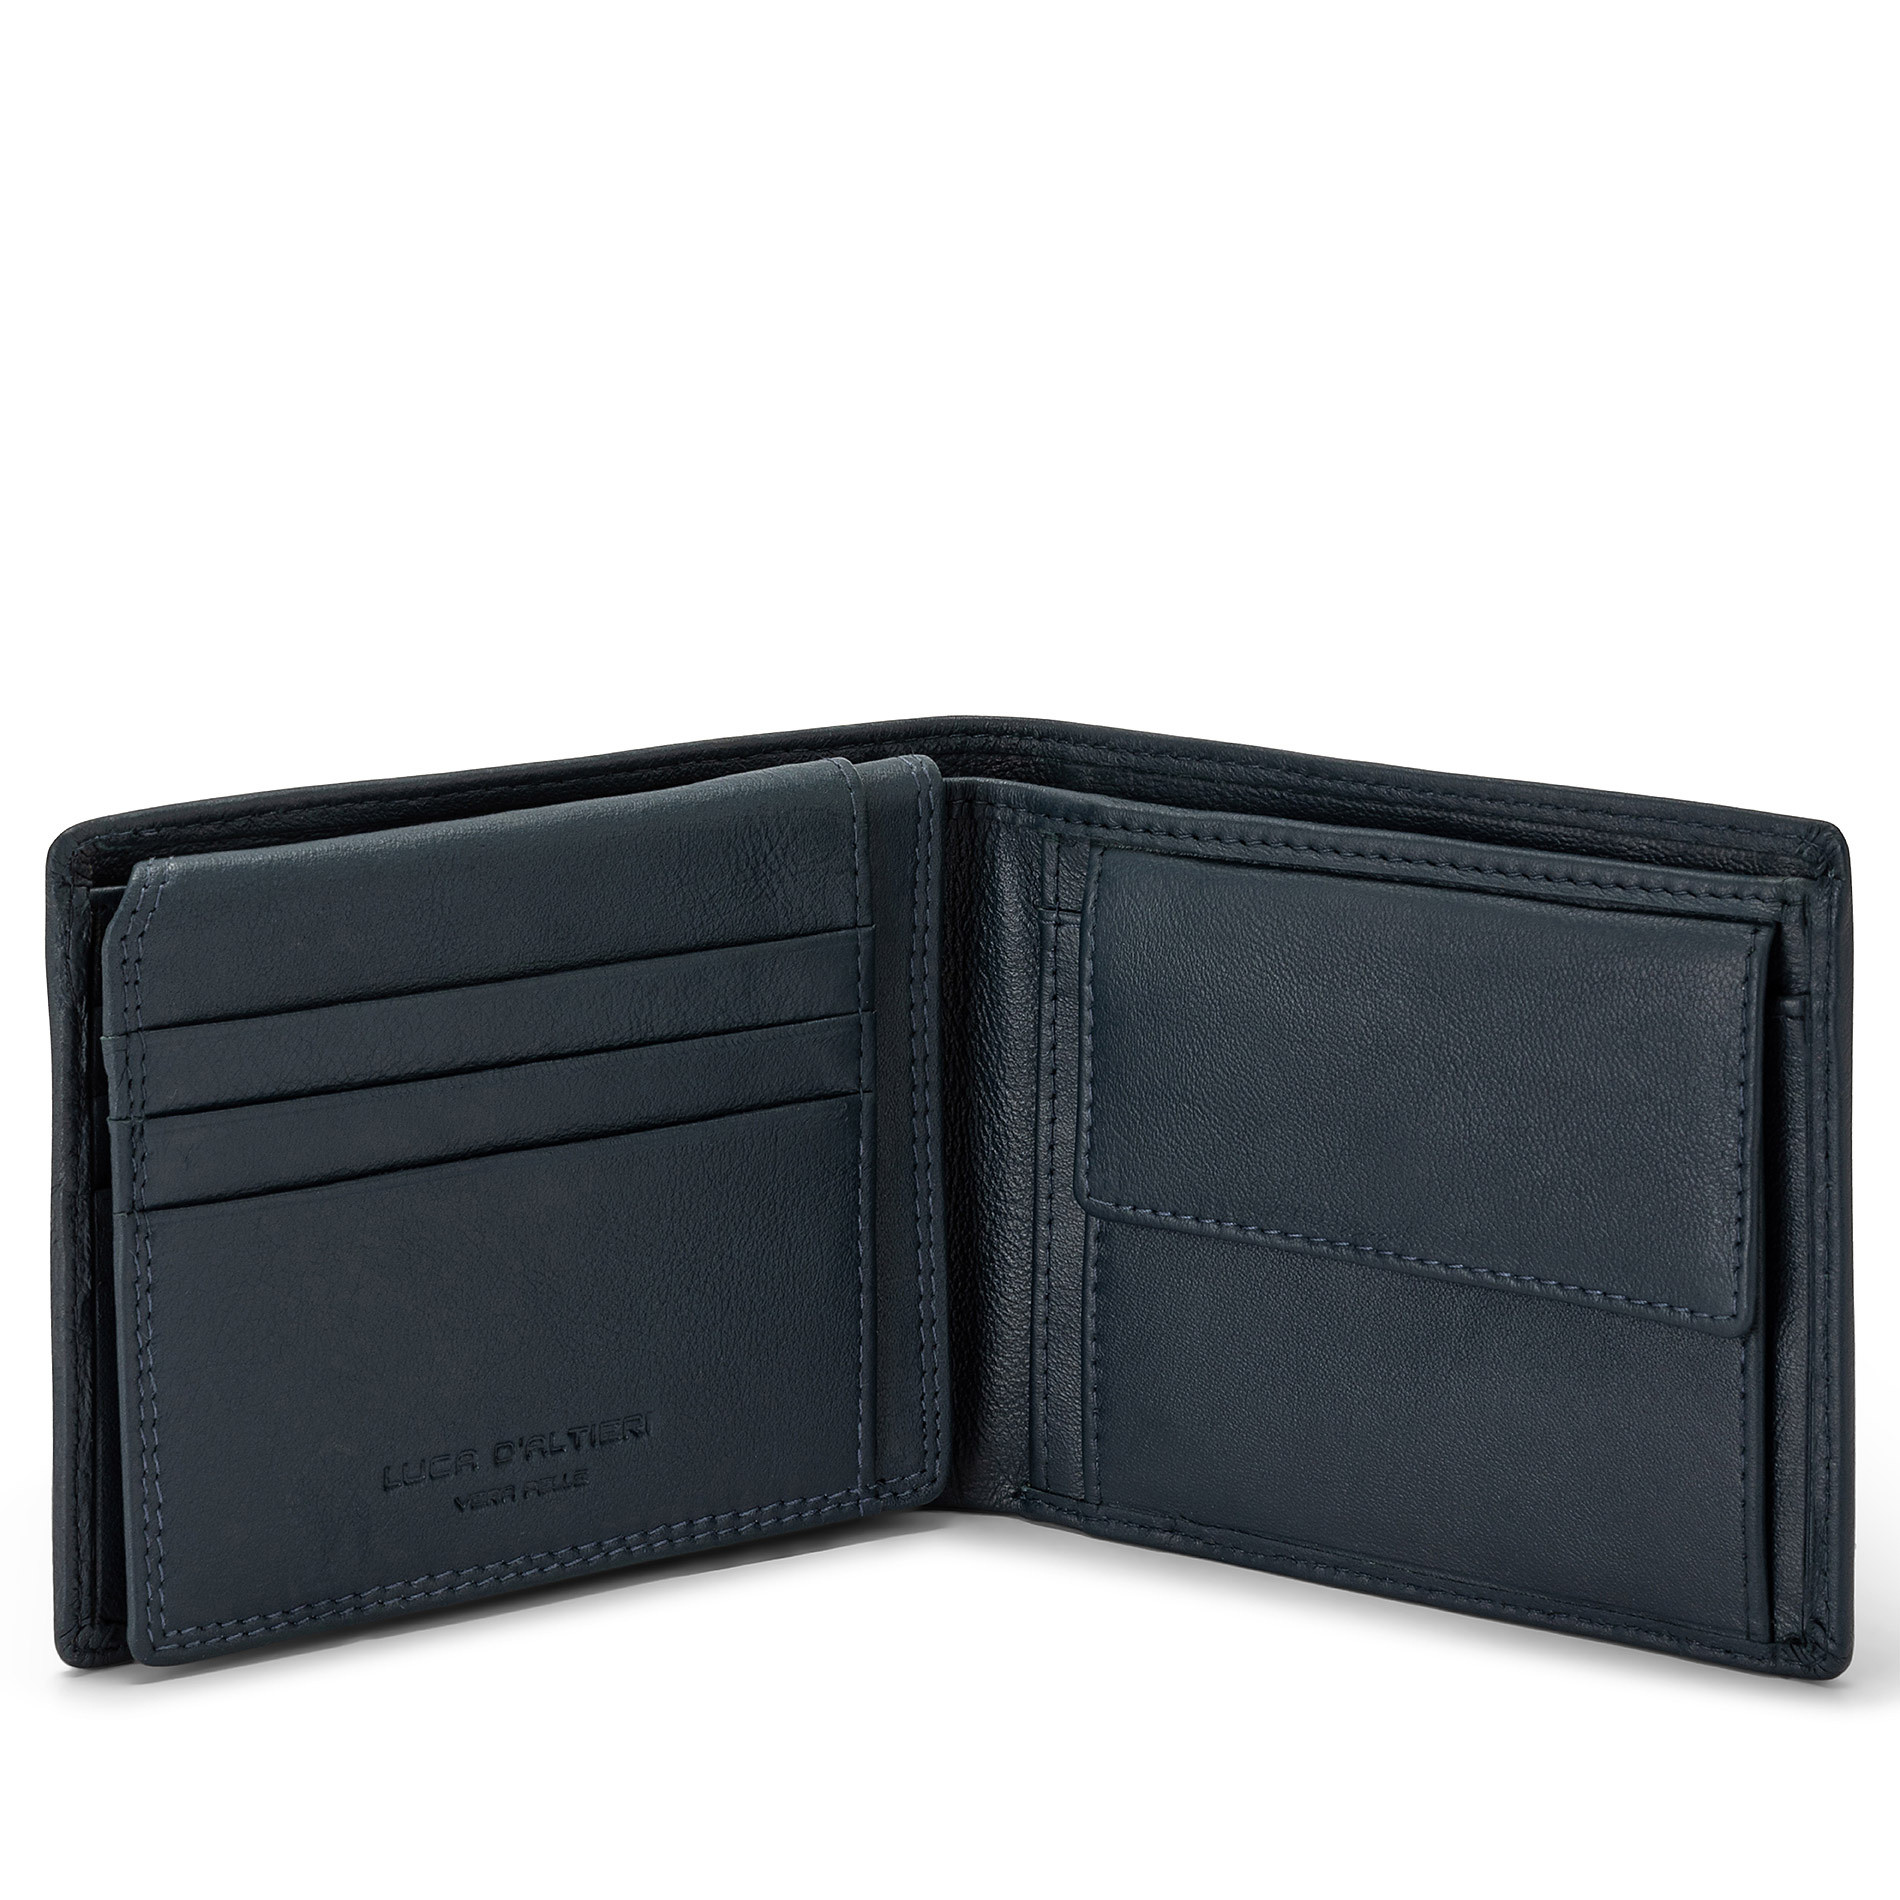 Luca D'Altieri leather wallet, Dark Blue, large image number 2